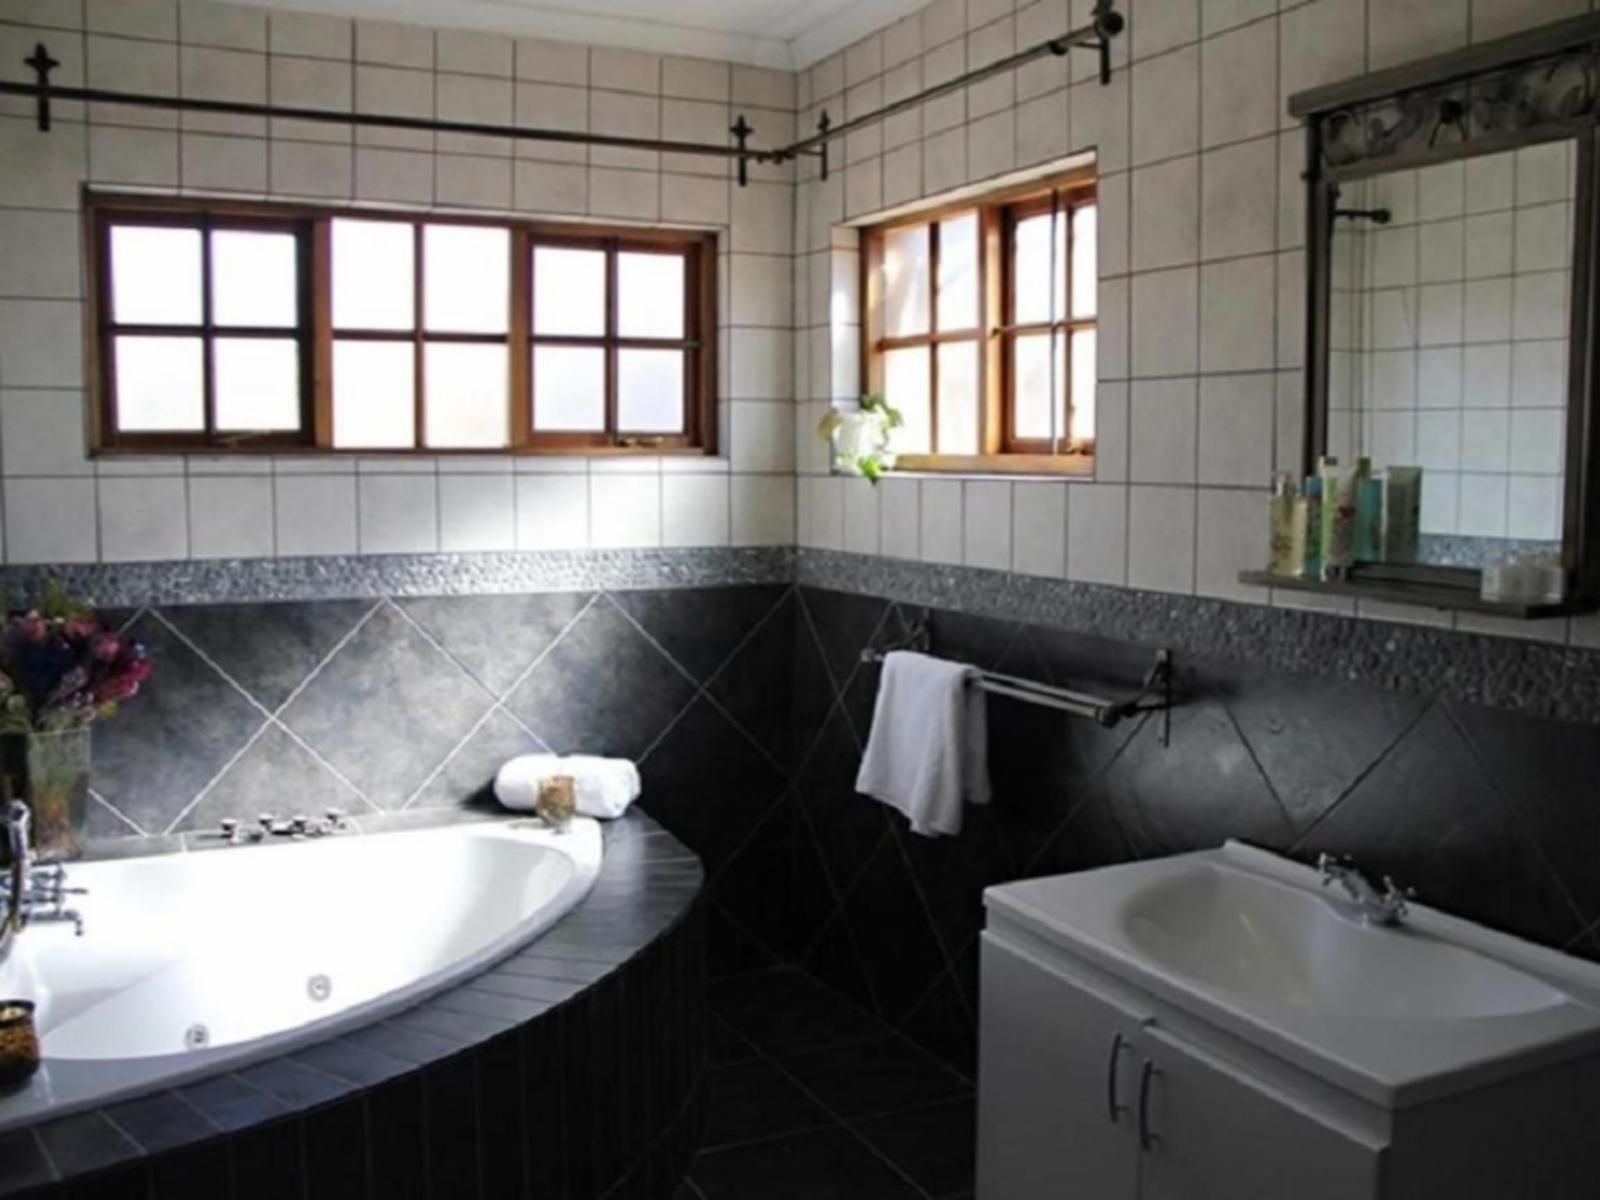 Greenleaf Guest Lodge Universitas Bloemfontein Free State South Africa Unsaturated, Bathroom